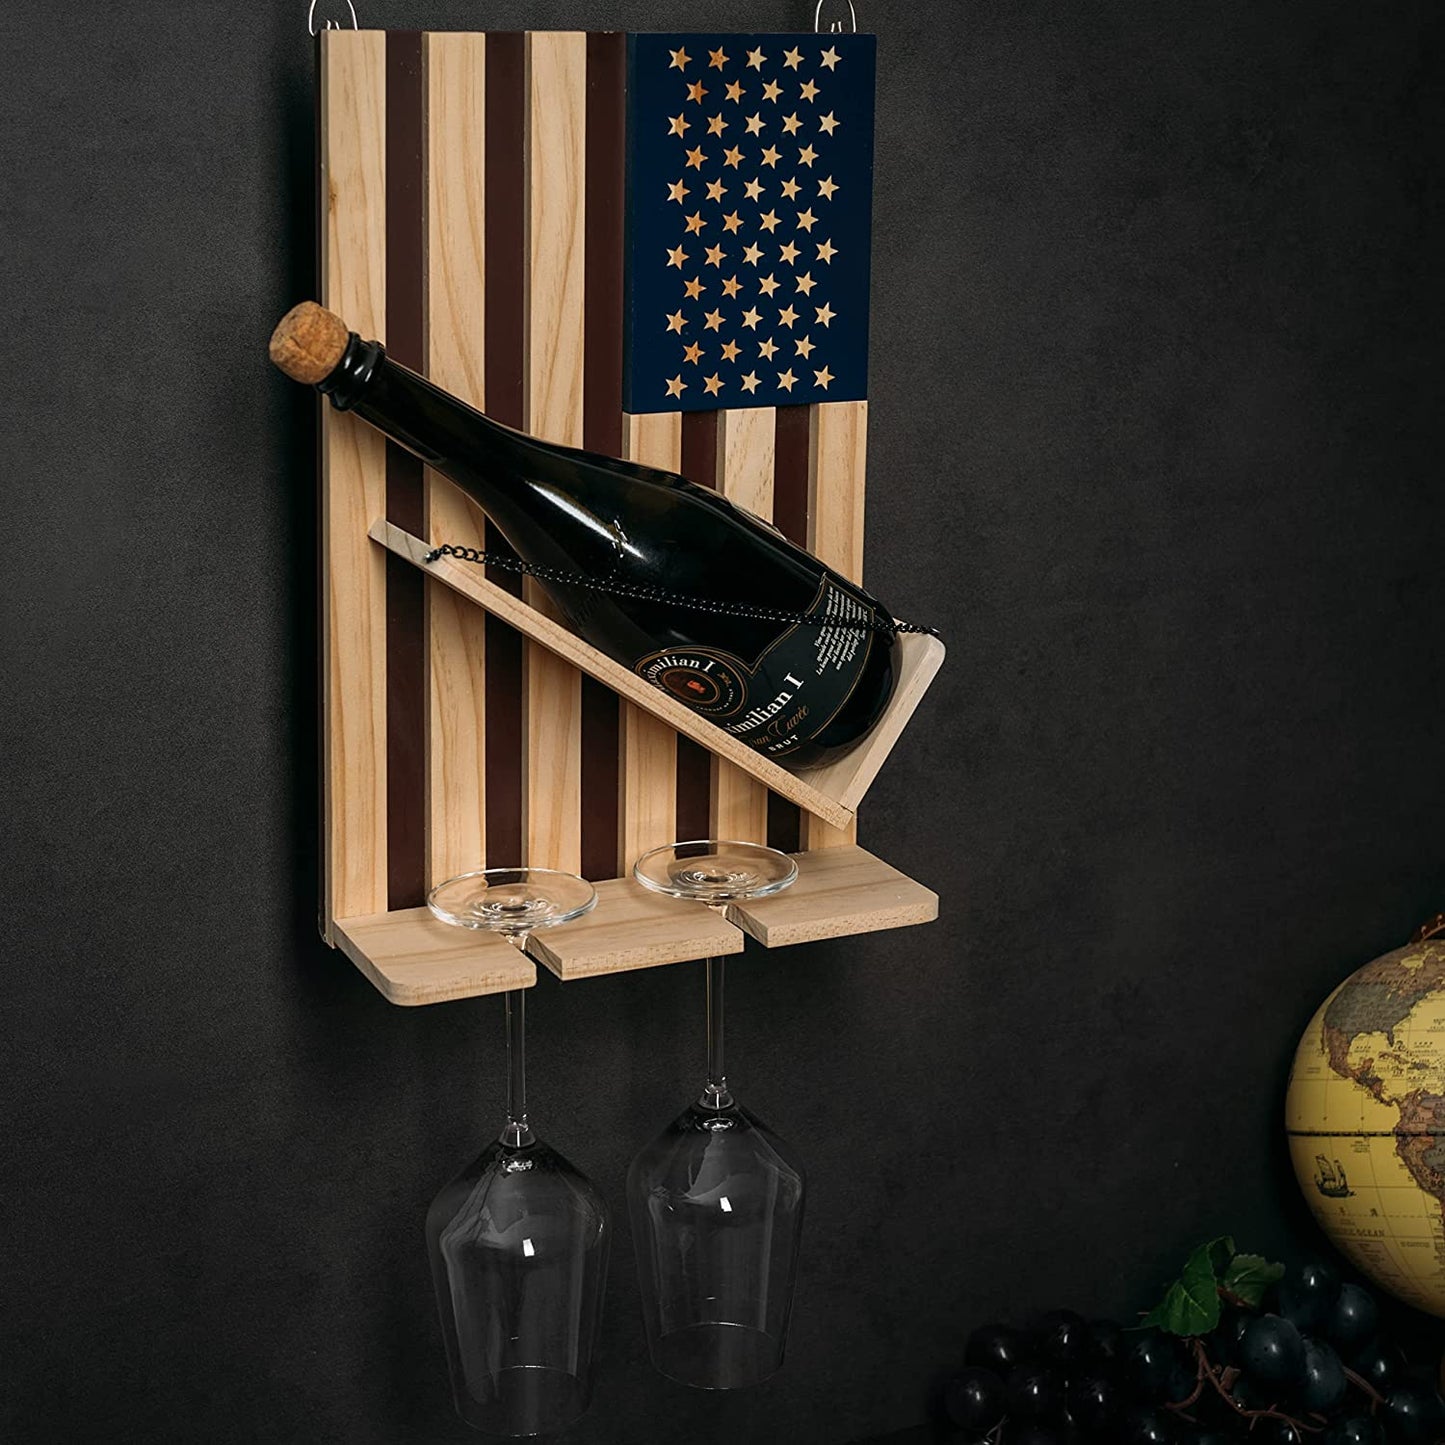 The Wine Savant - American Flag Wine & Bottle Wall Rack Holder with 2 Wine Glasses - Patriotic Centerpiece